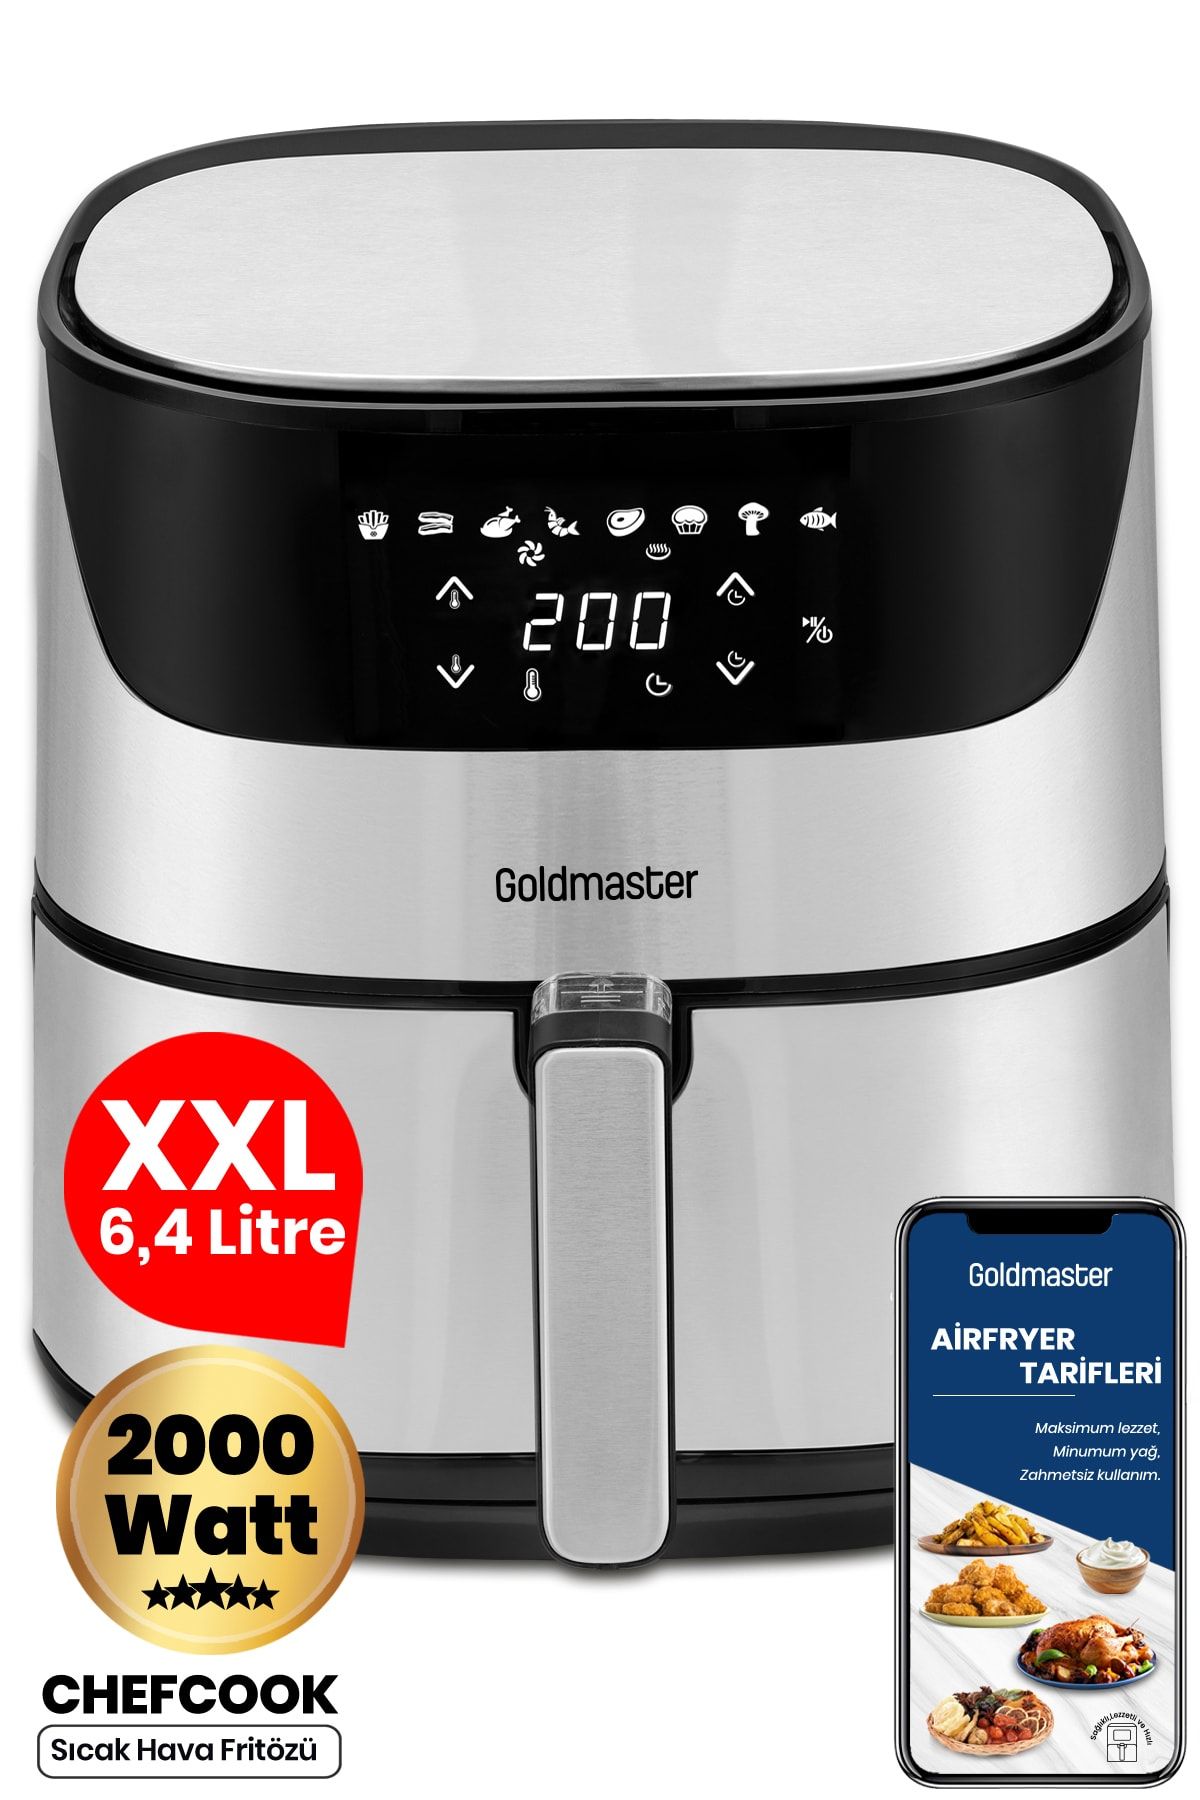 GoldMaster 2000 Watt Yüksek Güç 6,4 Litre Inox Geniş Xxl Dokunmatik Airfryer Yağsız Sıcak Hava Fritözü